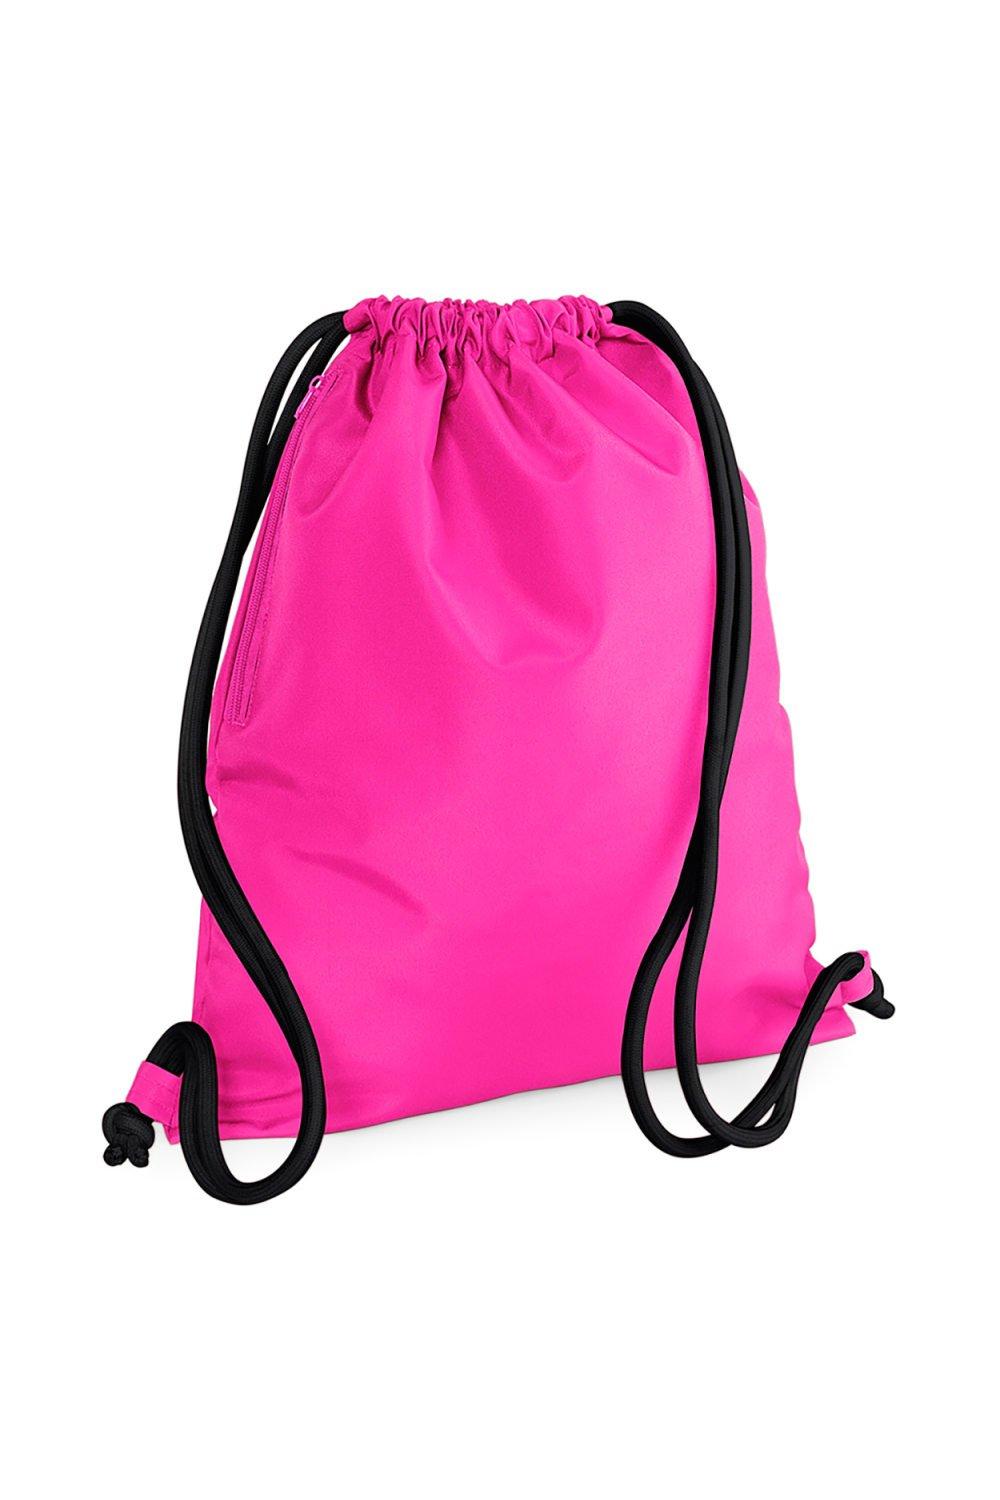 Сумка Icon на шнурке / Gymsac Bagbase, розовый сумка urban gymsac на шнурке sol s розовый